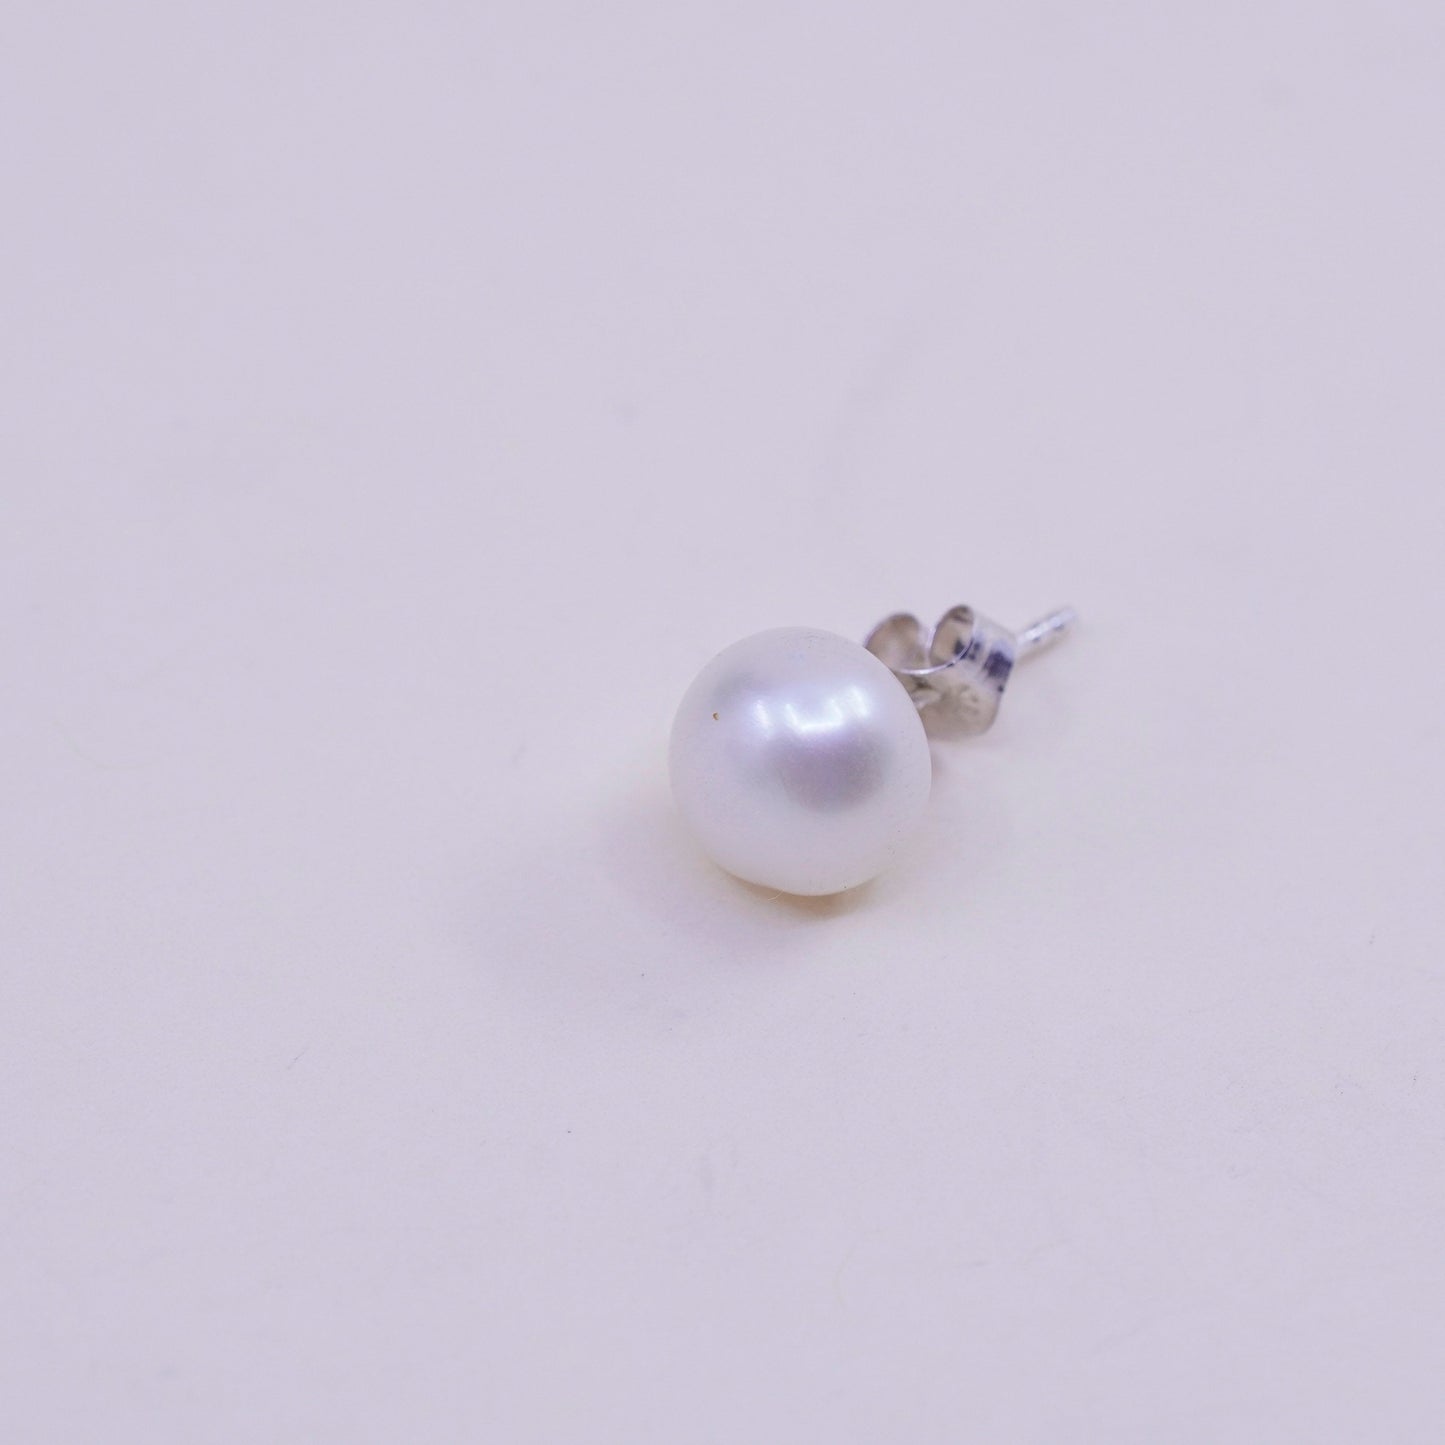 8mm, Vintage sterling silver handmade earrings, 925 studs with freshwater pearl